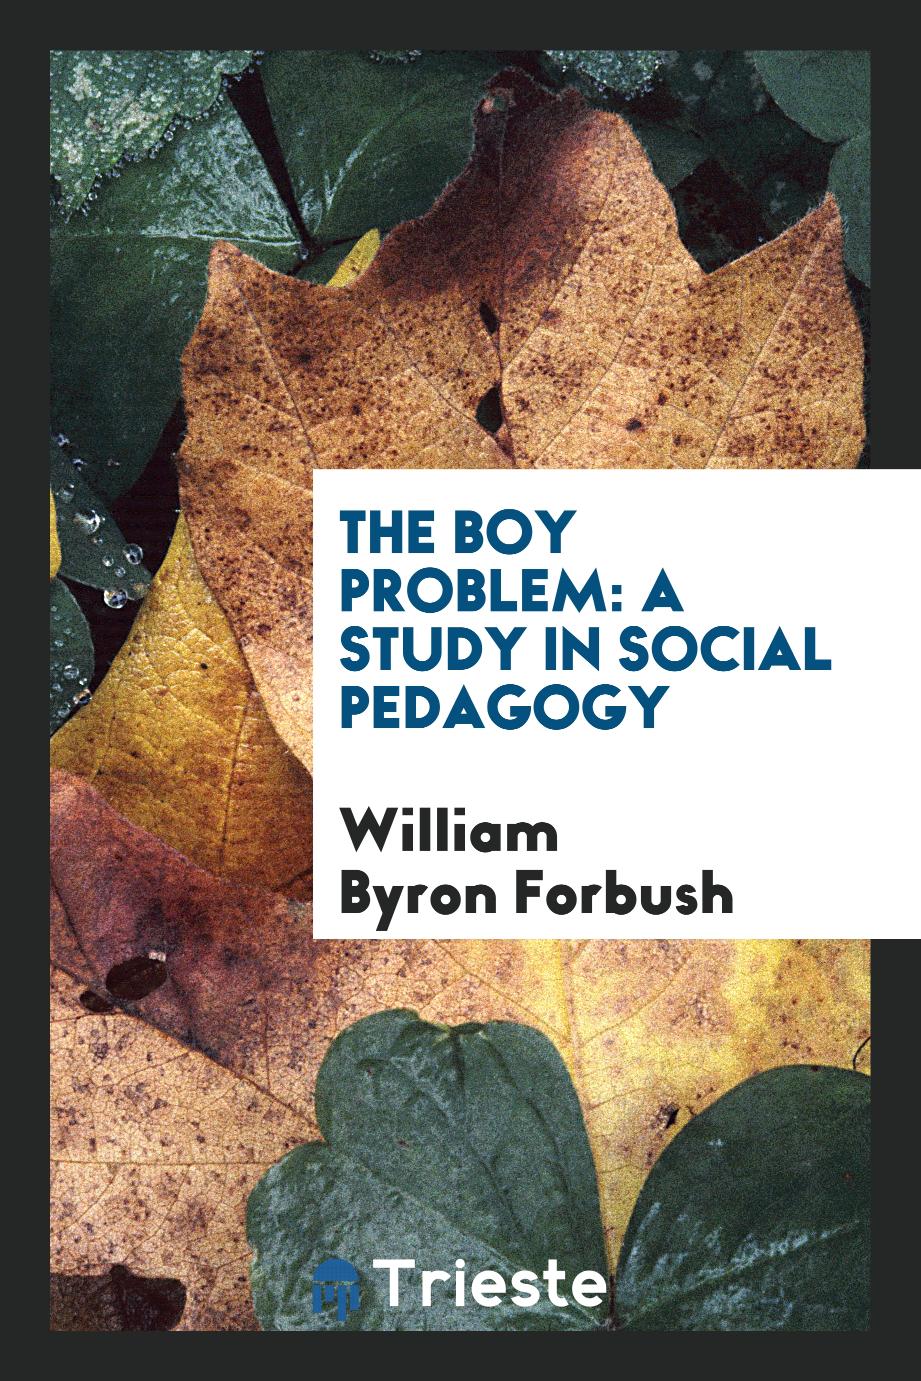 The boy problem: a study in social pedagogy